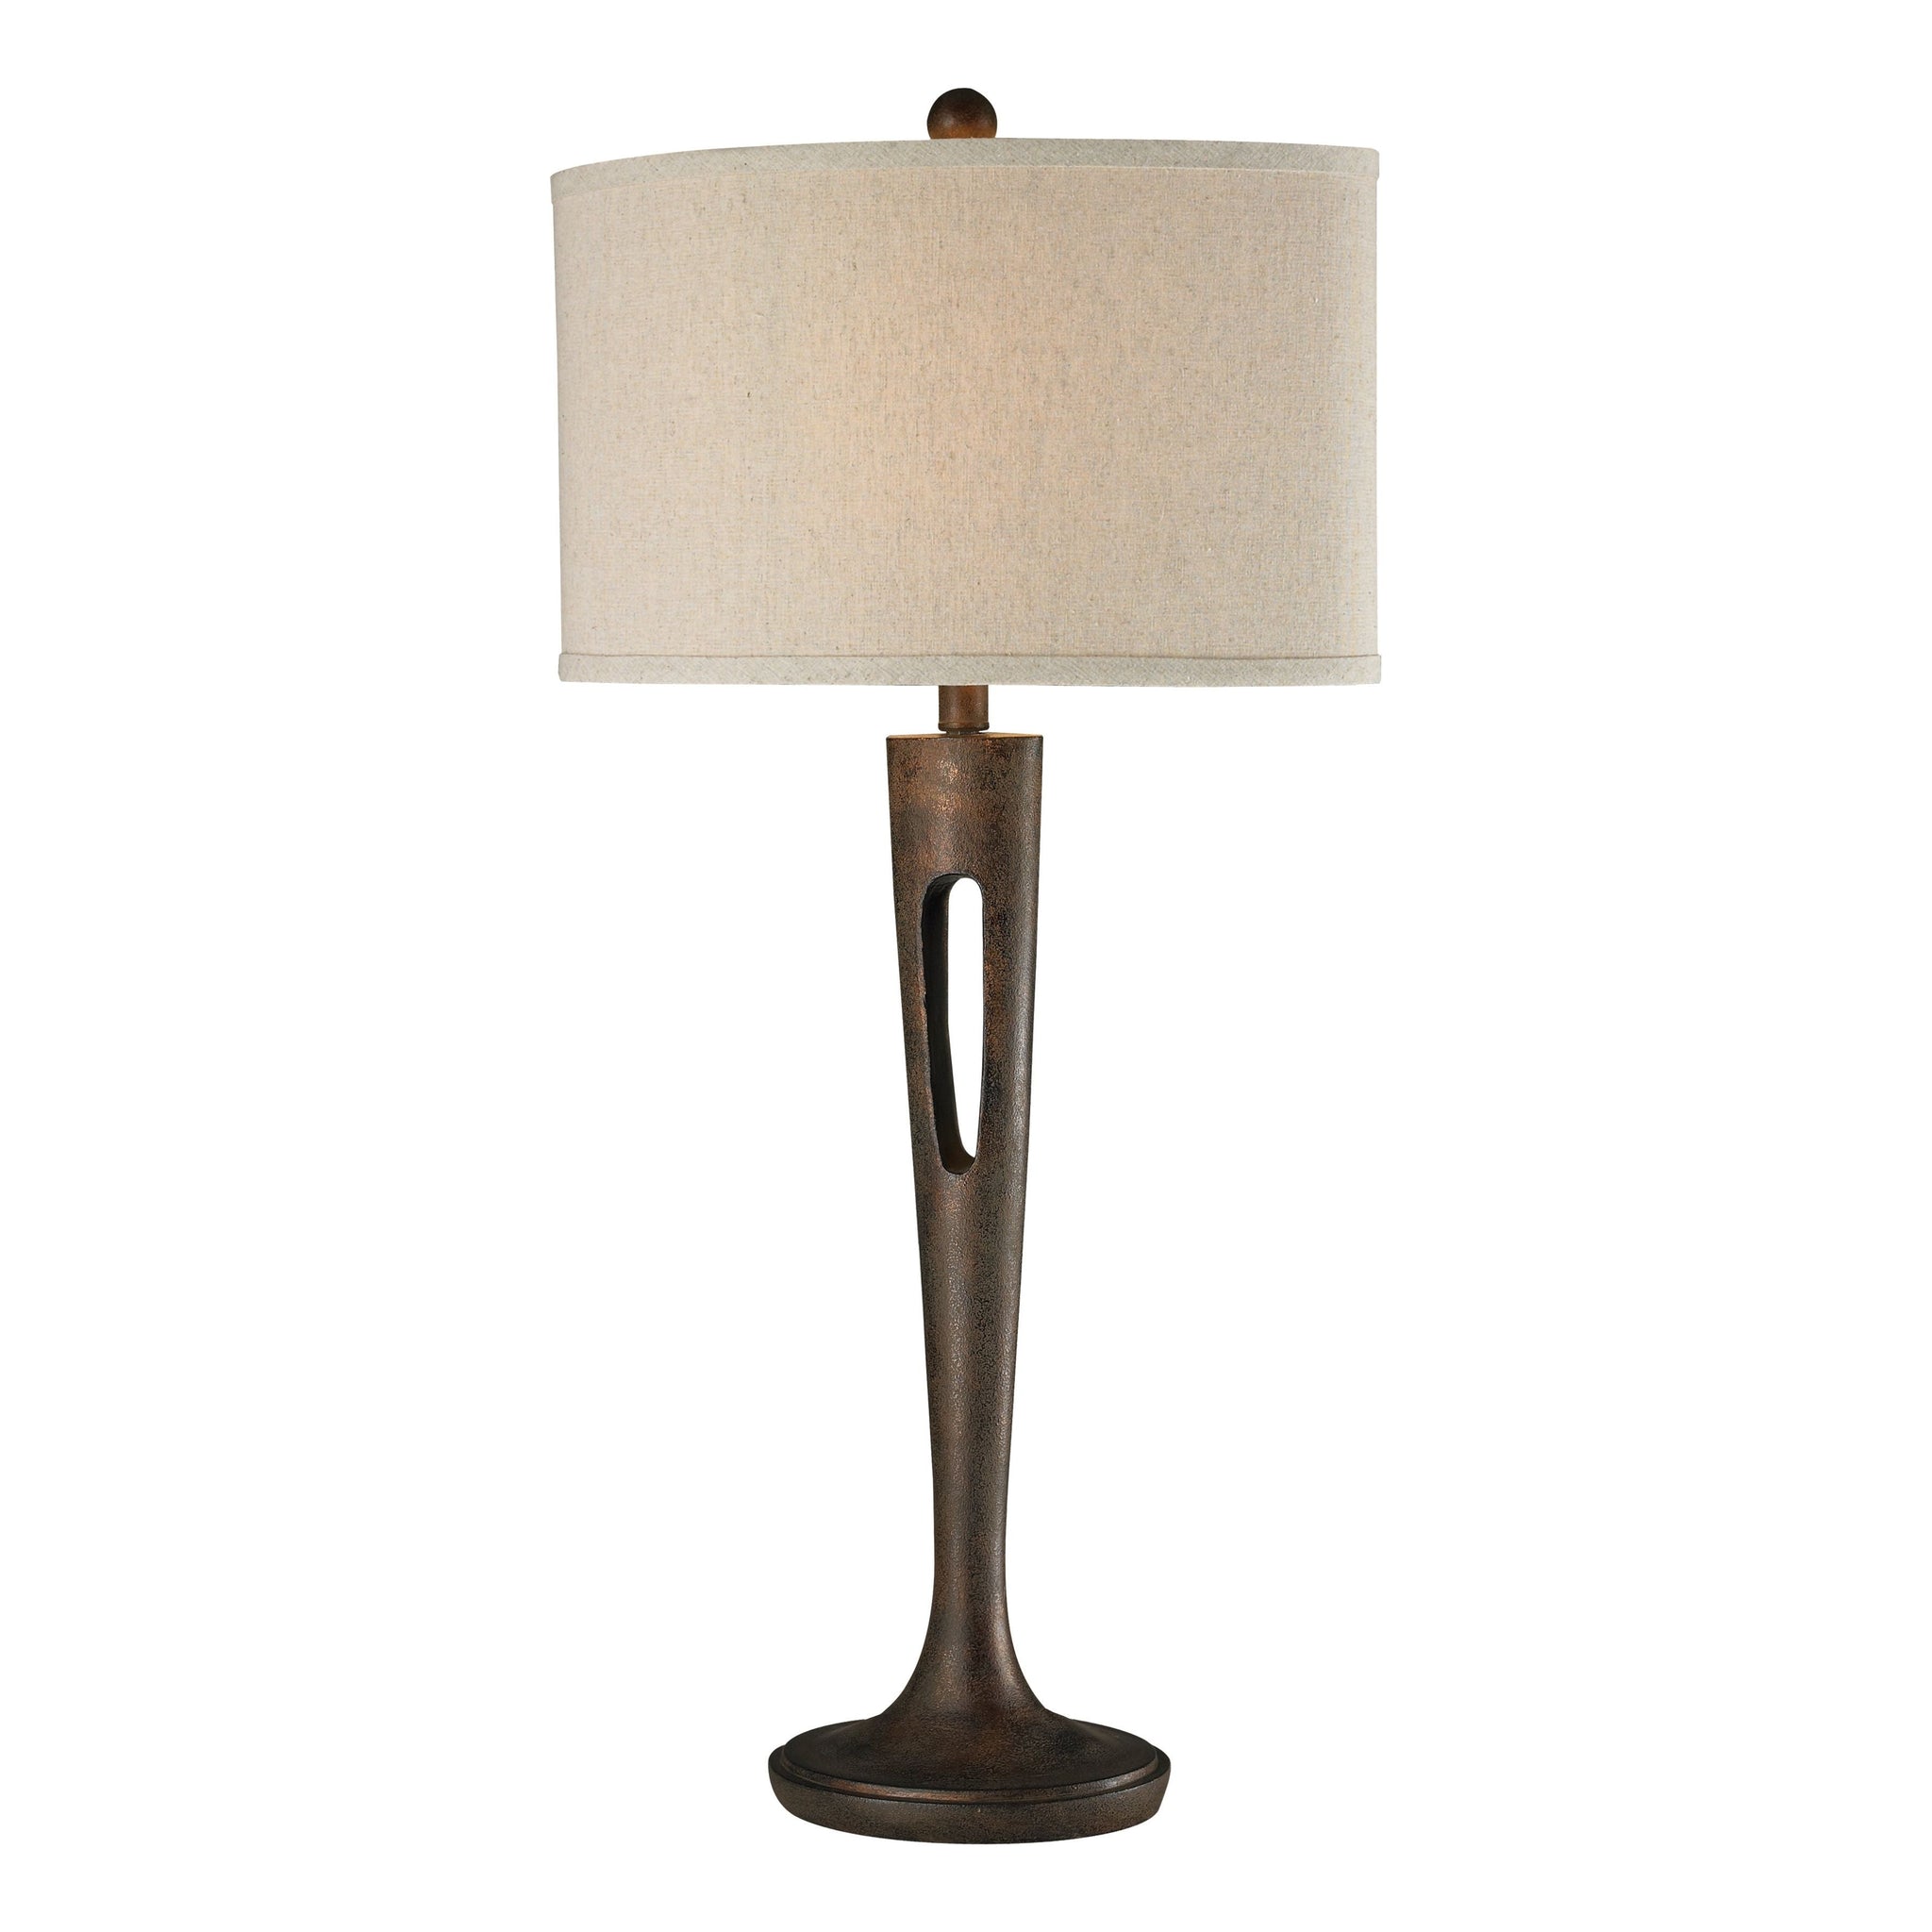 Martcliff 35" High 1-Light Table Lamp